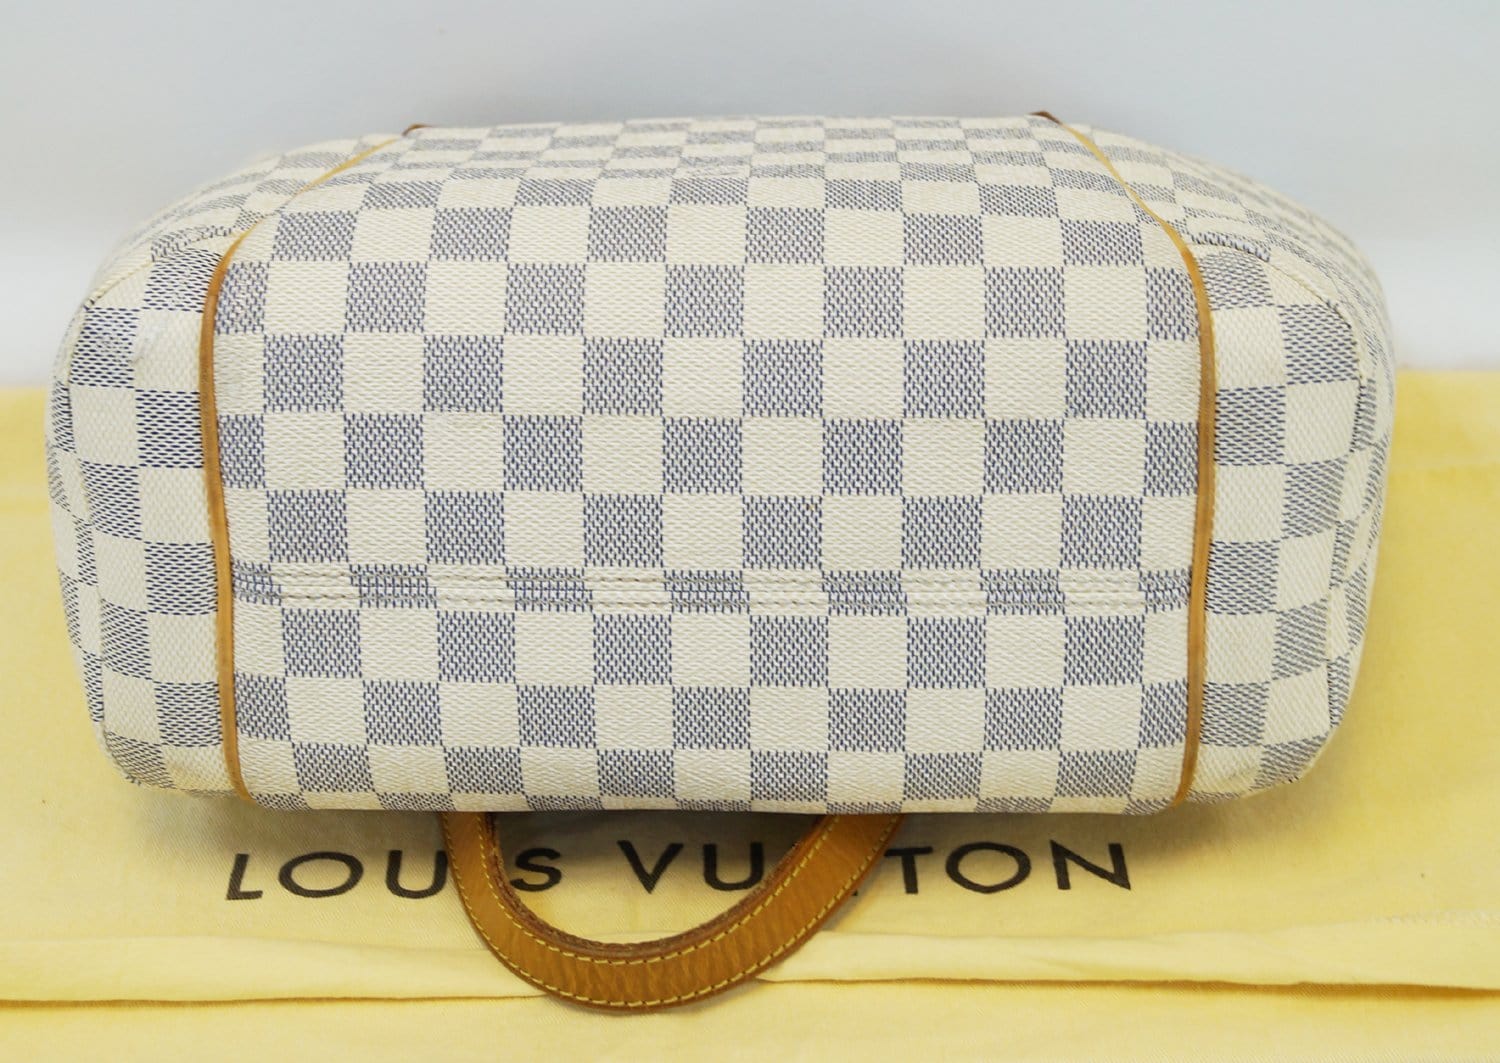 Louis Vuitton Damier Azur Totally PM Tote Bag Nice!